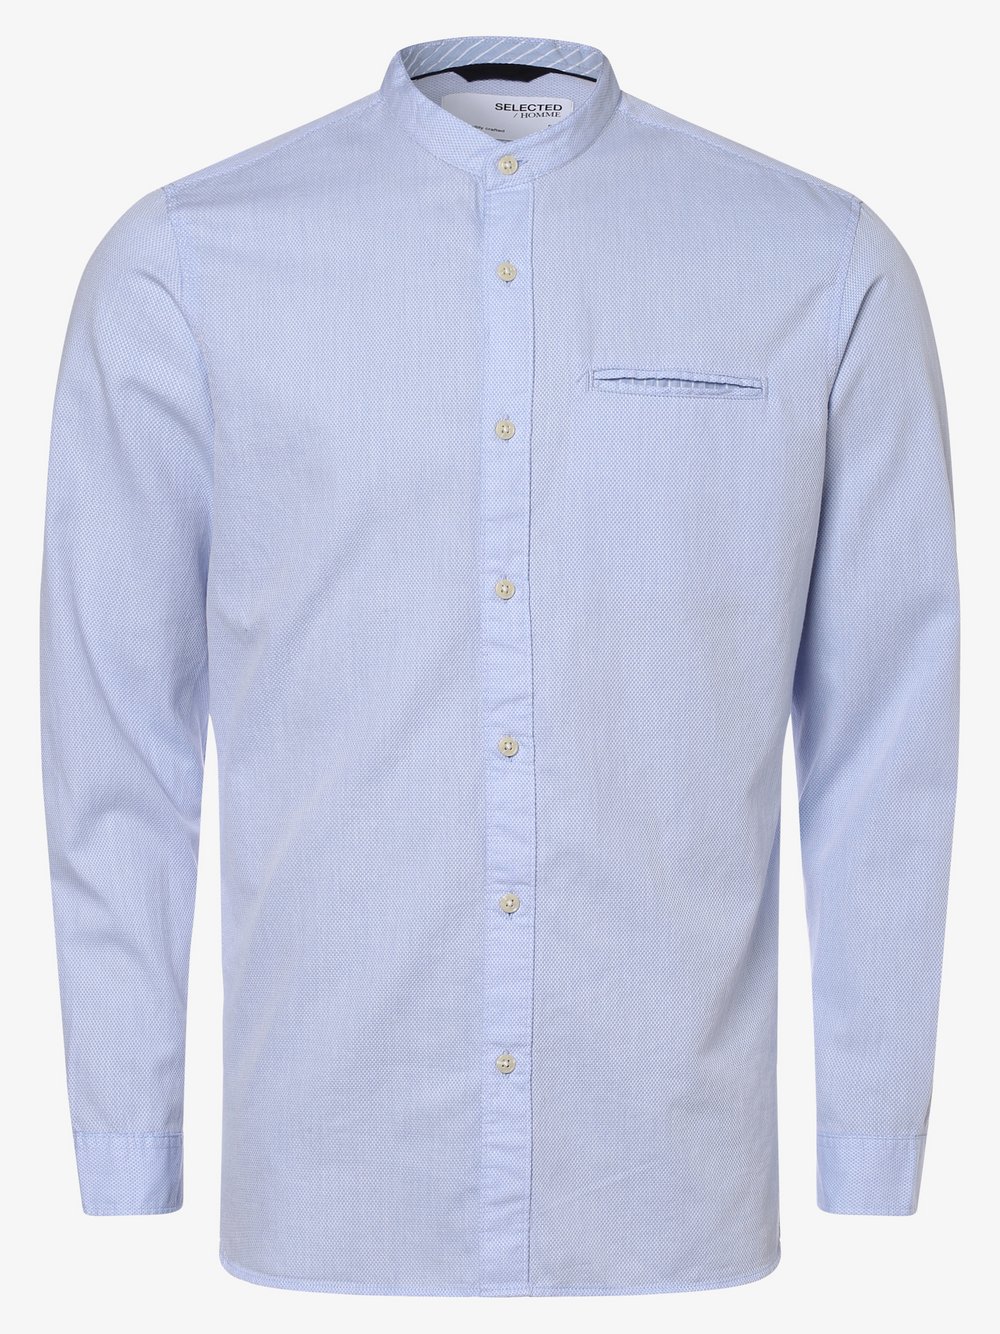 Selected - Koszula męska – SLHSlimtexas, niebieski